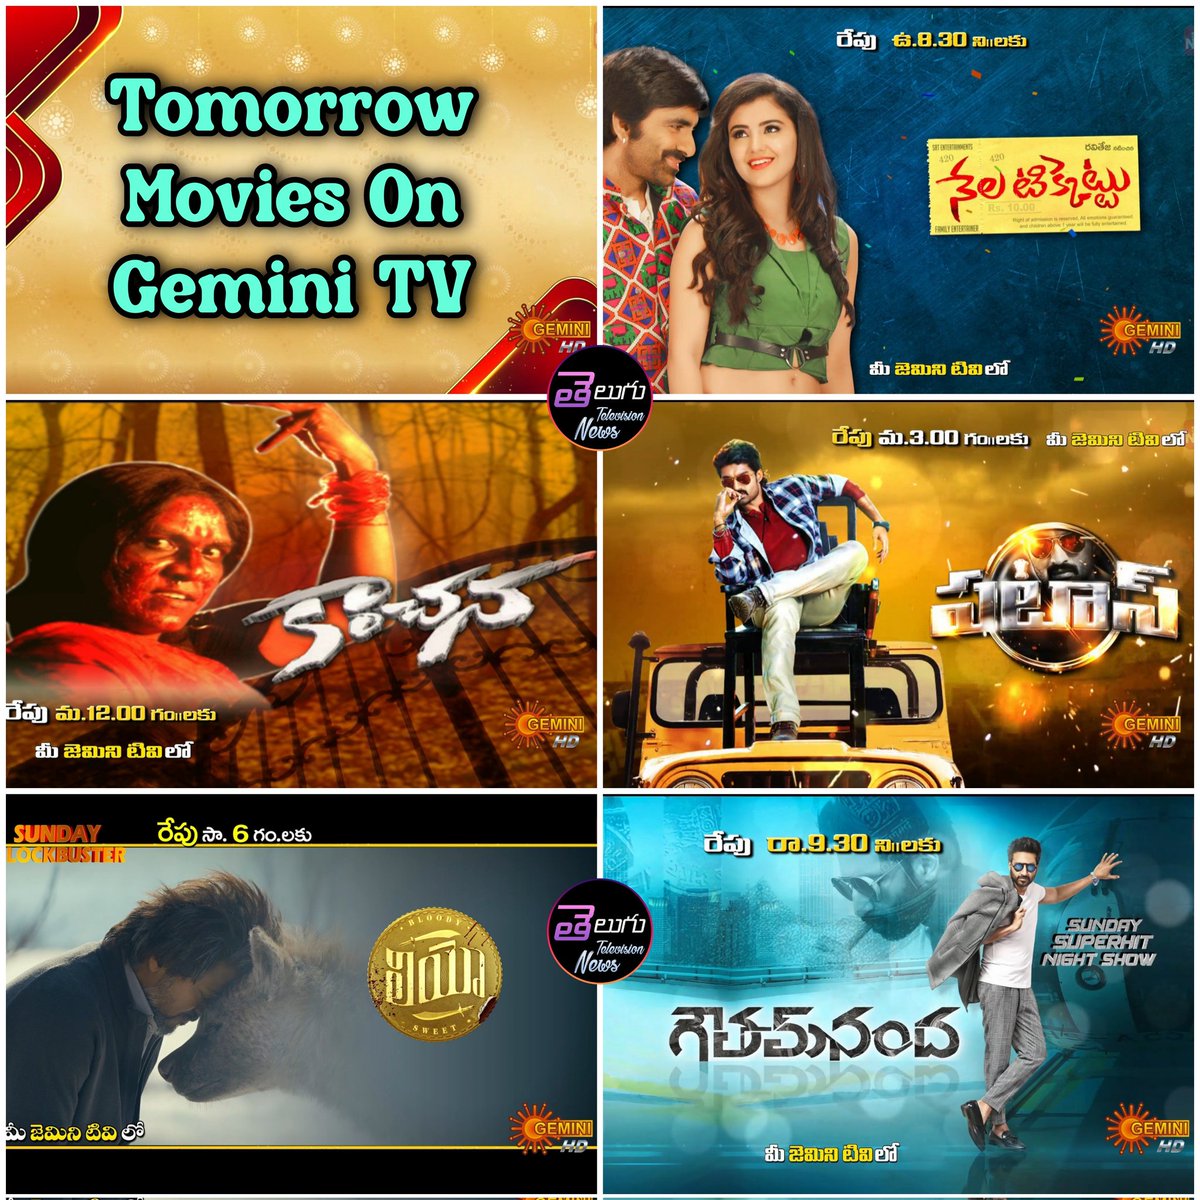 Tomorrow Movies On #GeminiTV 

8.30am:- #NelaTicket 
12pm:- #kanchana 
3pm:- #Pataas 
6pm:- #Leo 
9.30pm:- #GouthamNanda 

#RaviTeja #RaghavaLawrence #KalyanRam #ThalapathyVijay #Gopichand